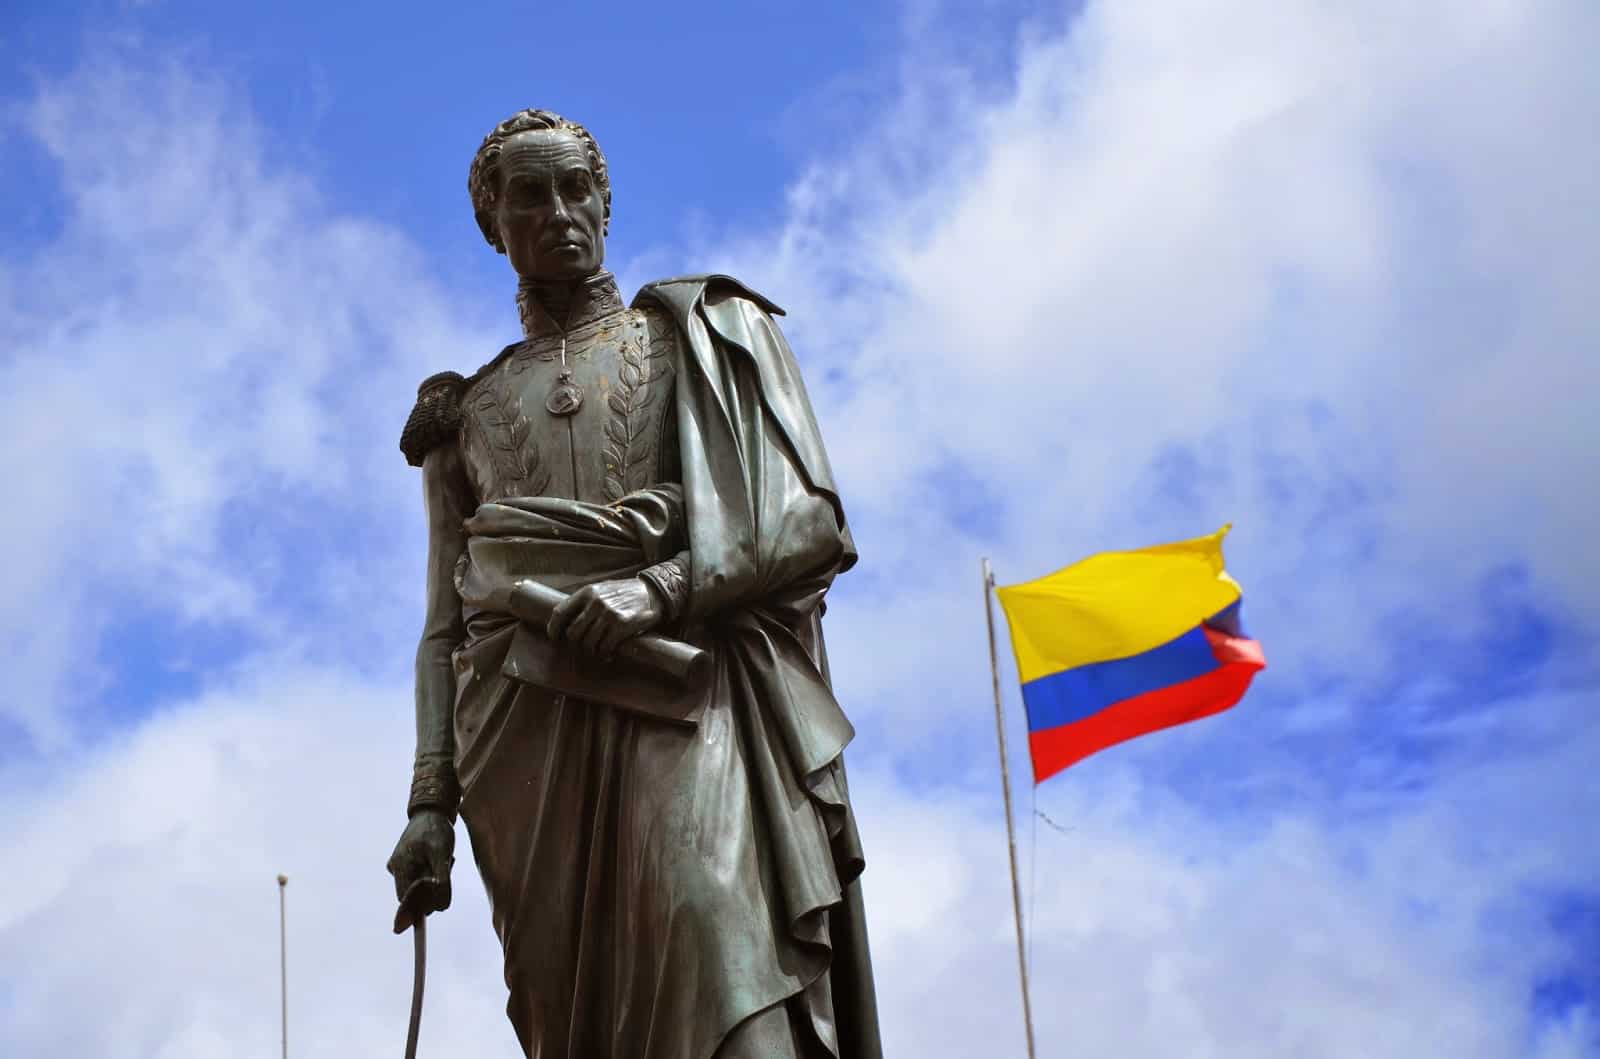 Simón Bolívar monument in Plaza de Bolívar, La Candelaria, Bogotá, Colombia